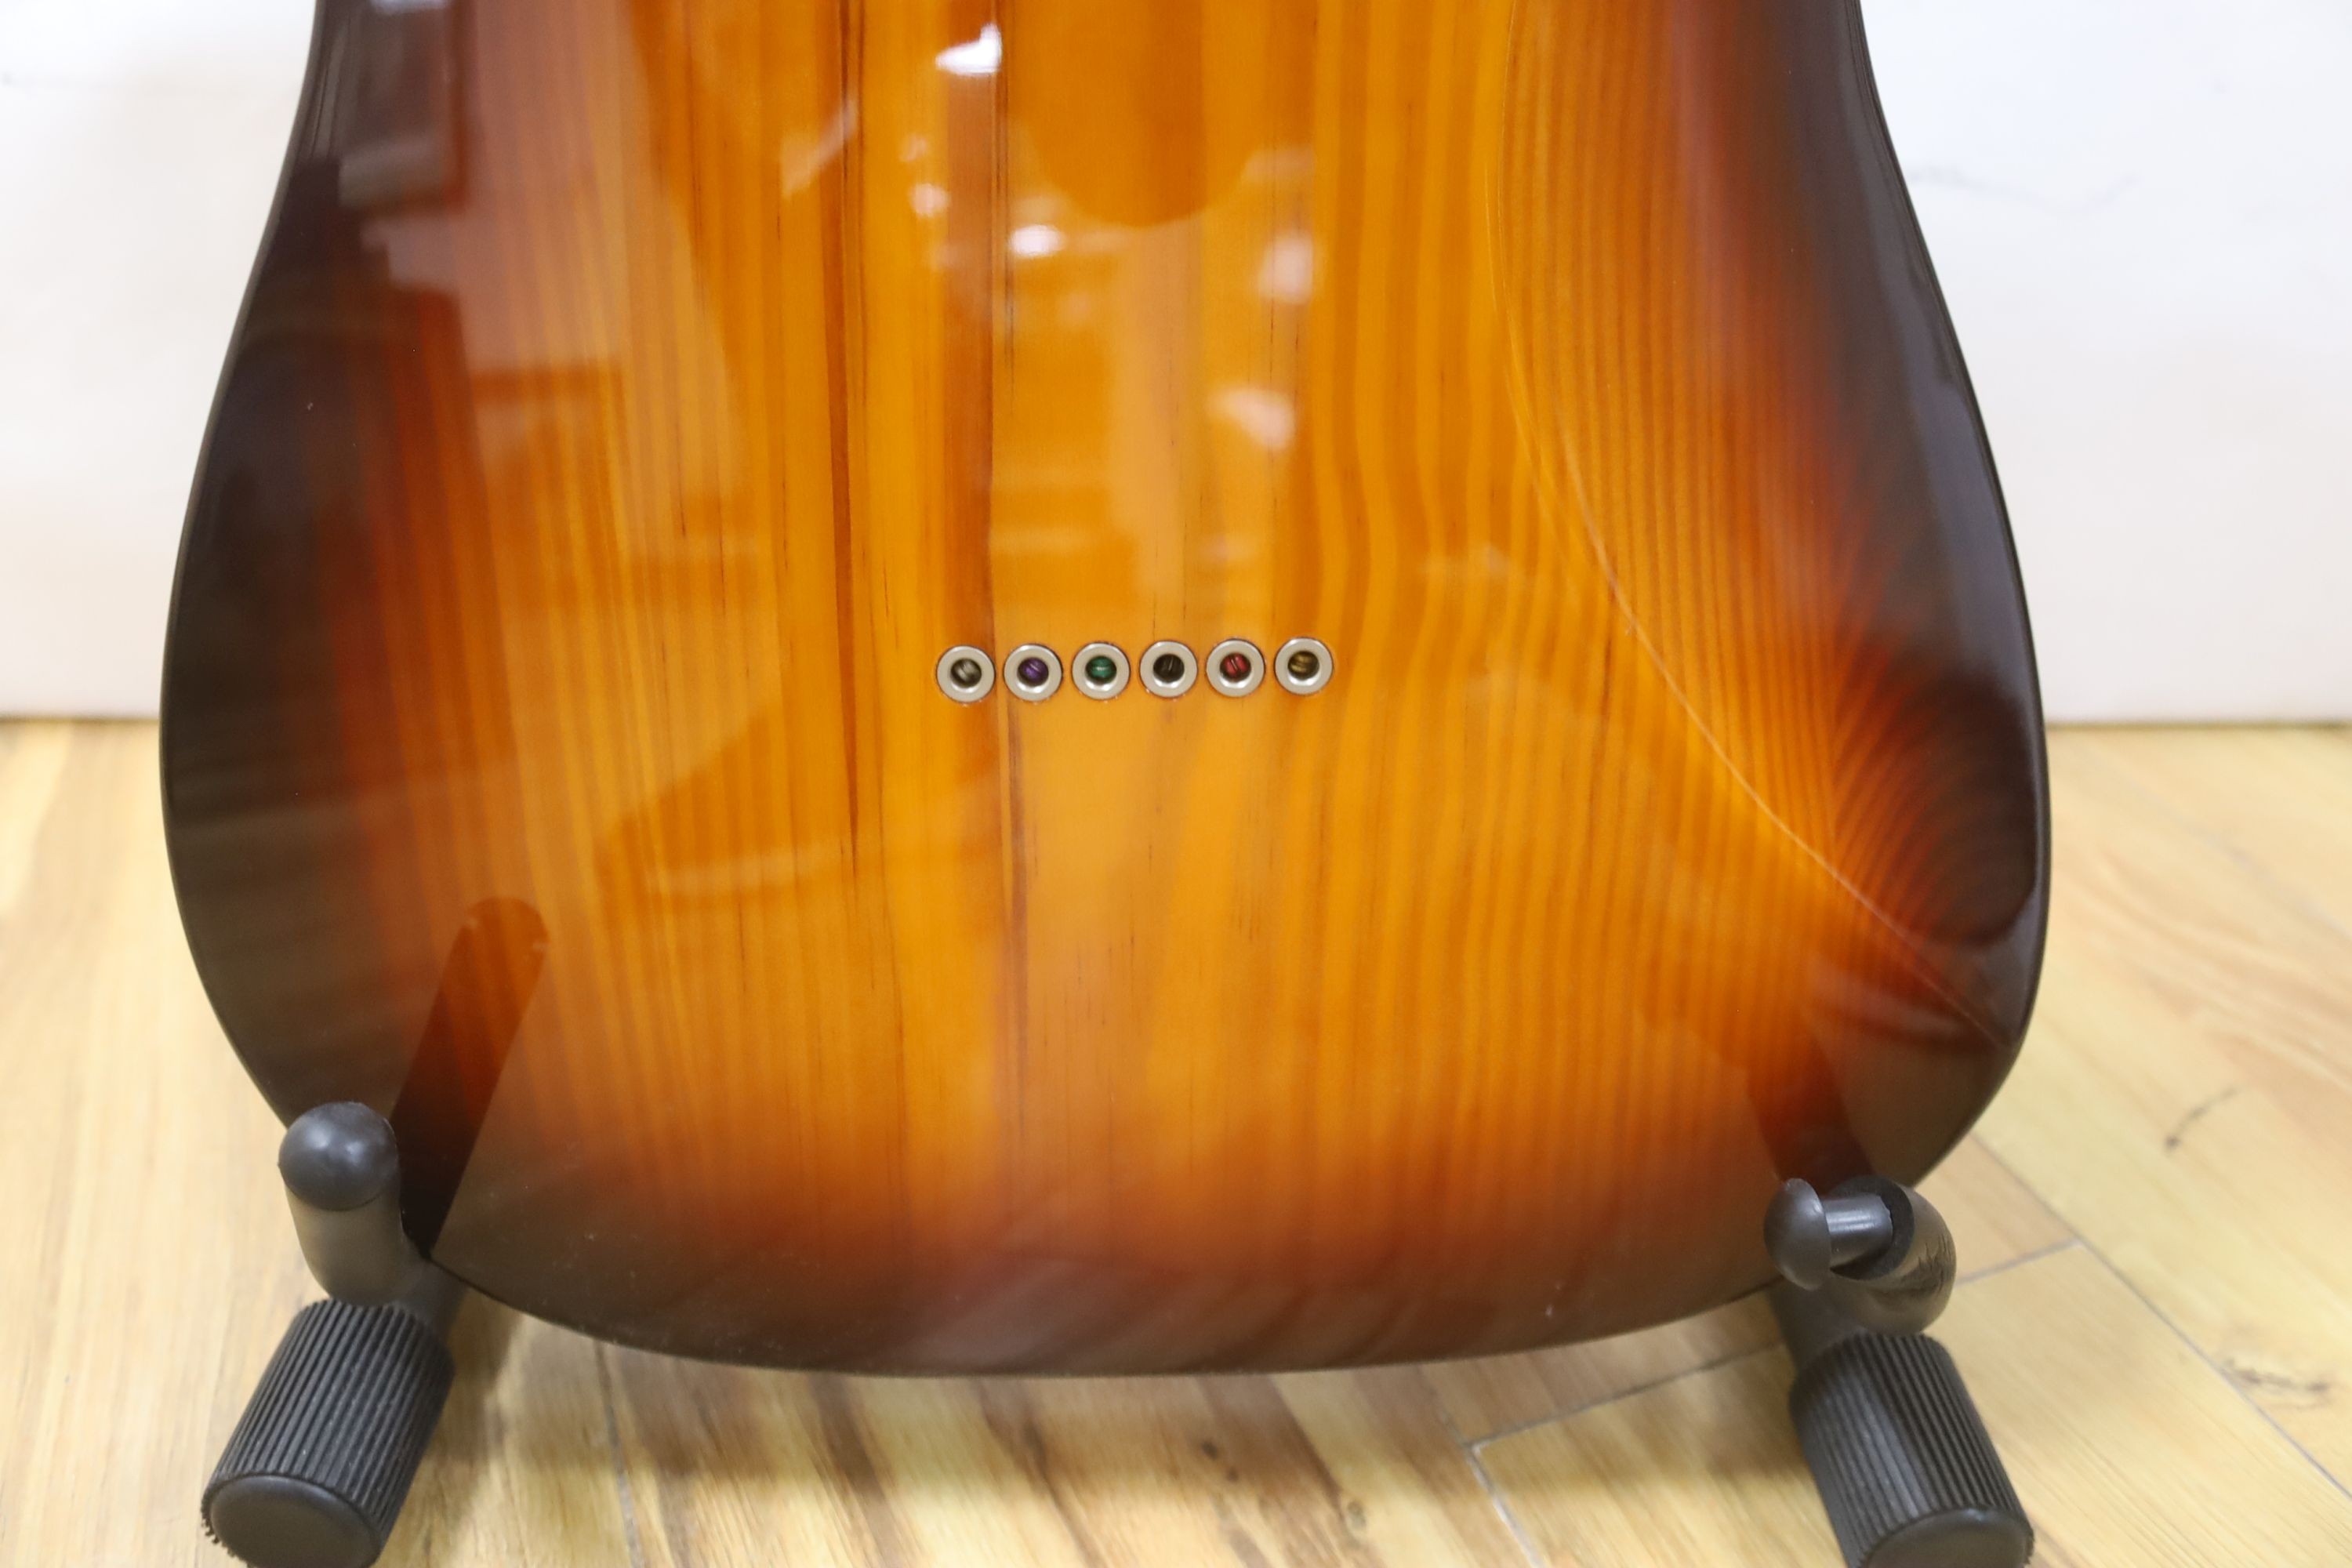 A Fender Telecaster guitar. Serial number CGF1314464 - Image 8 of 8